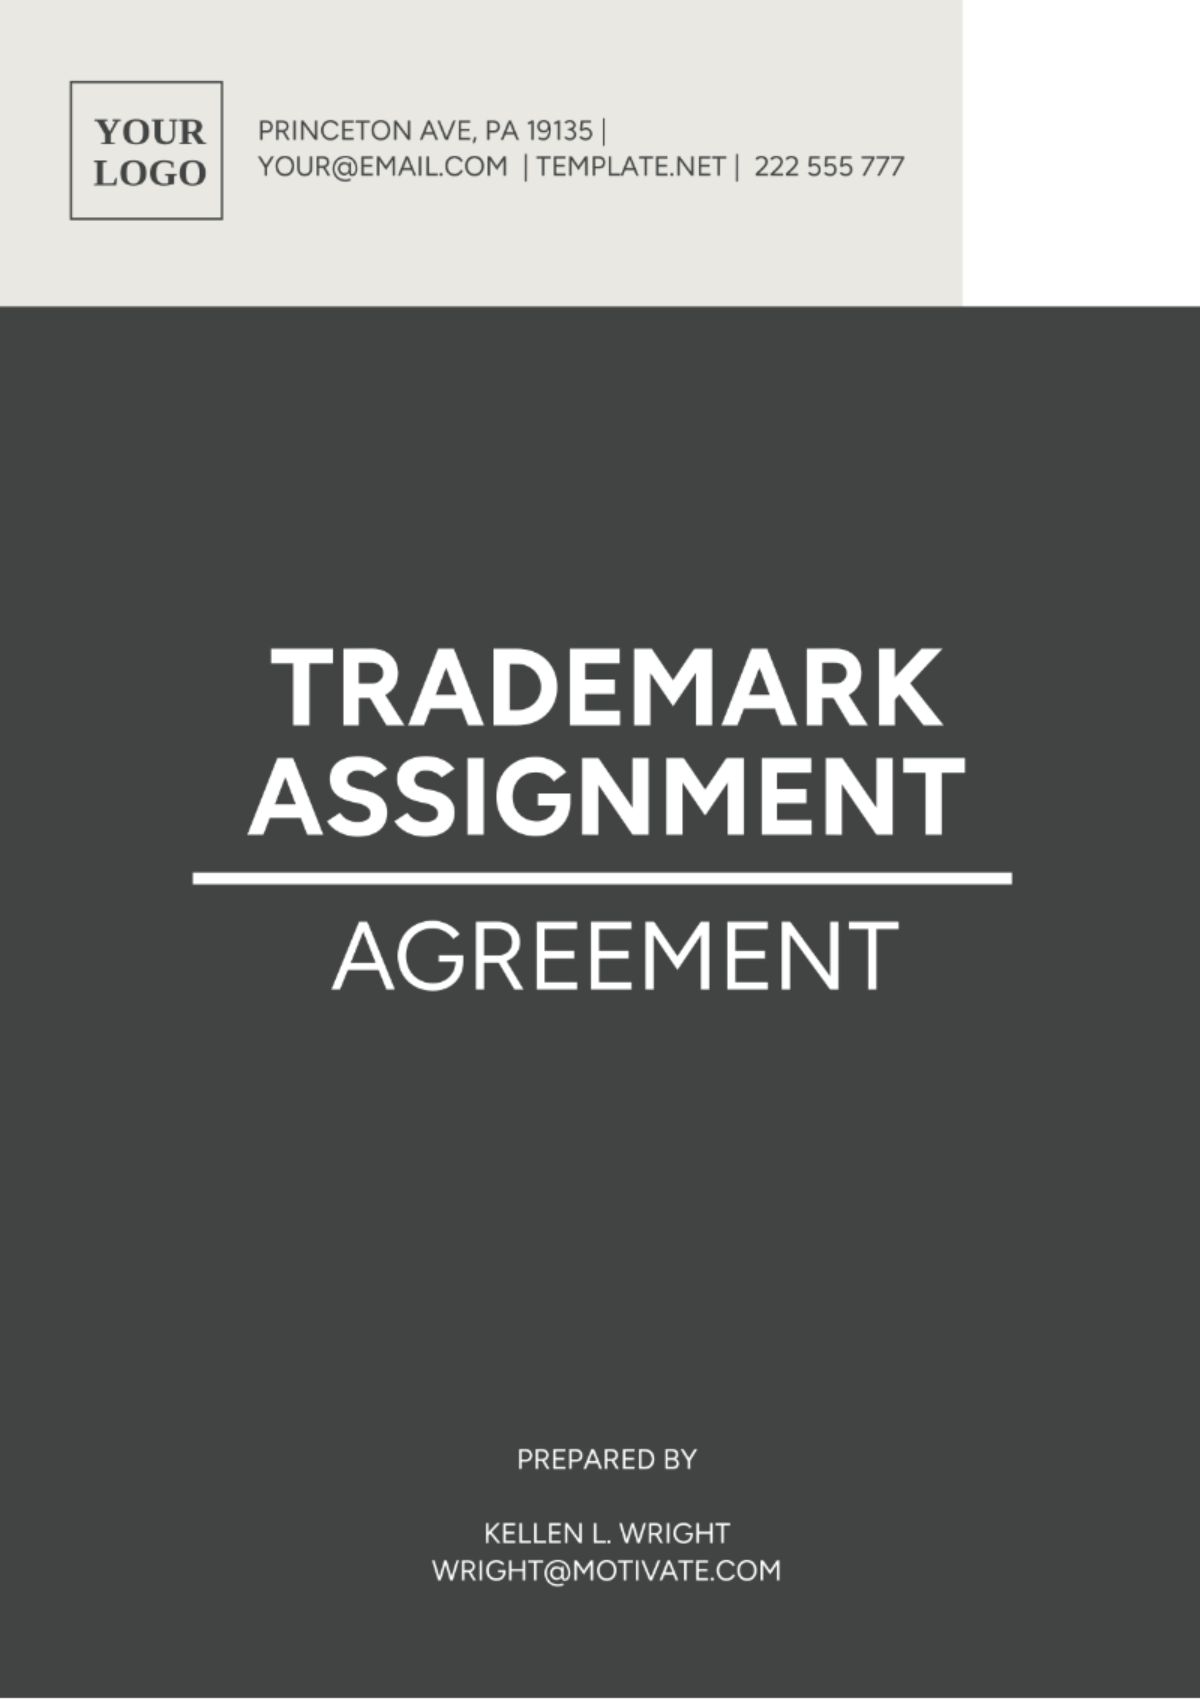 Free Trademark Assignment Agreement Template